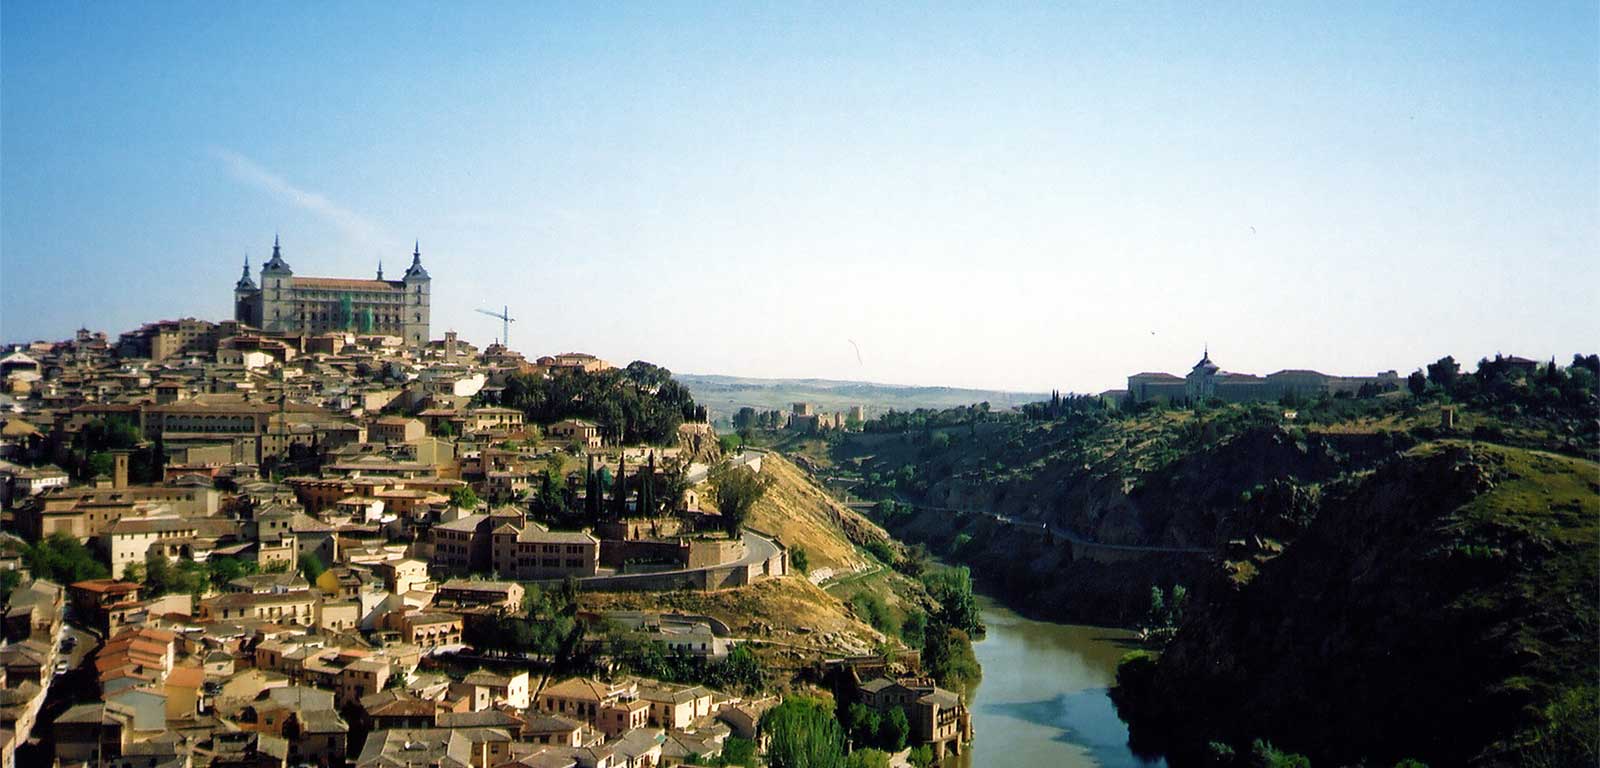 Spania. Toledo. Panoramautsikt mot Tajo og Toledo. Foto